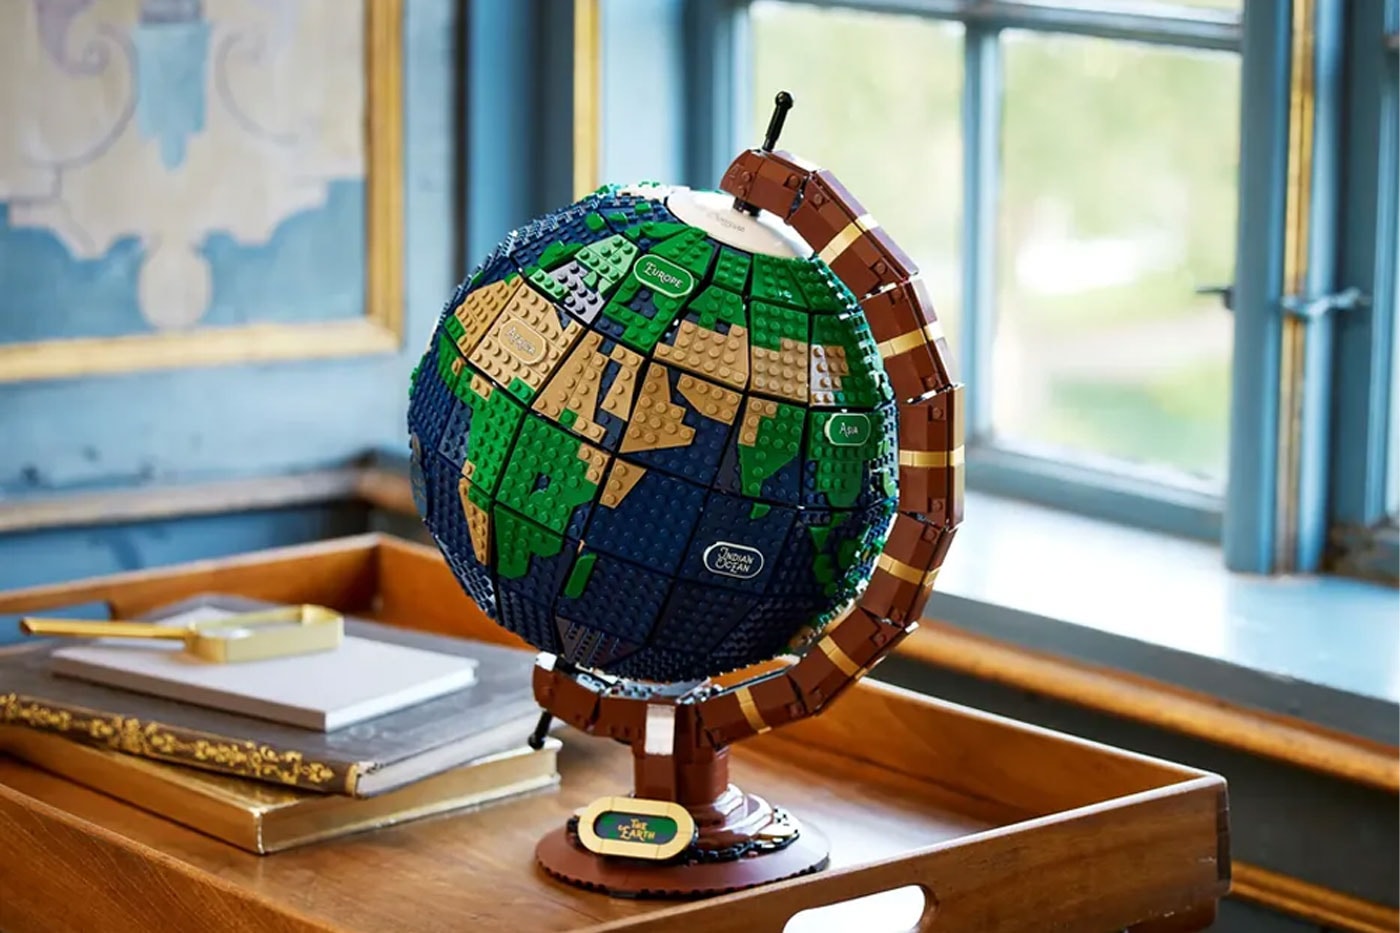 LEGO Ideas「The Globe」地球儀積木套組正式登場